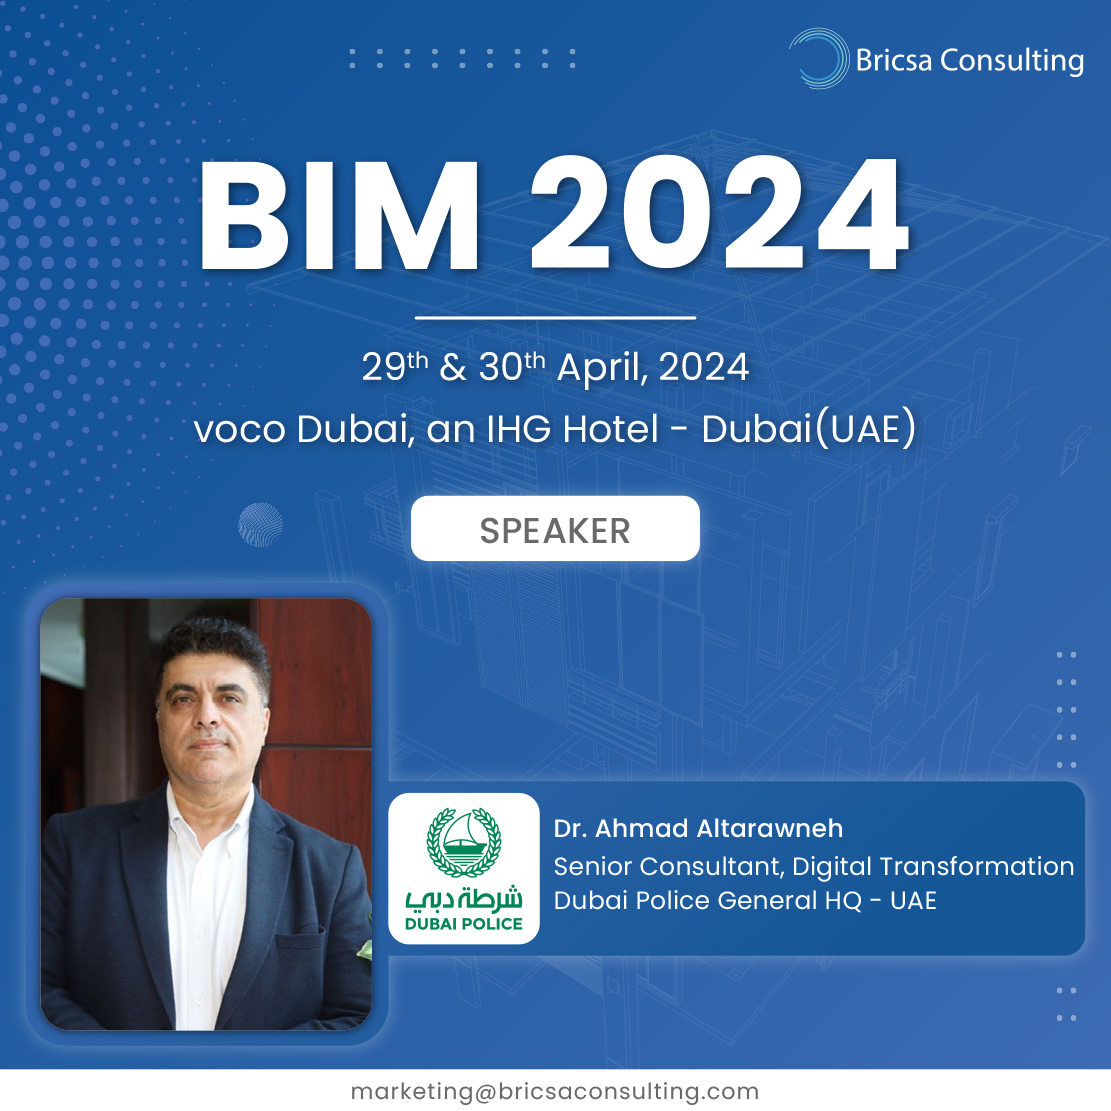 🎉 Welcome our keynote speaker for BIM 2024! 🎉

🎤 Dr. Ahmad Altarawneh, DBA. PE.
Title: Senior Consultant, Digital Transformation
Organization: Dubai Police HQ- UAE

🔗 Register now: bim.bricsaconsulting.com

#BIMDubai2024 #speakerannouncement #dubaipolice #bimexperts #dubai